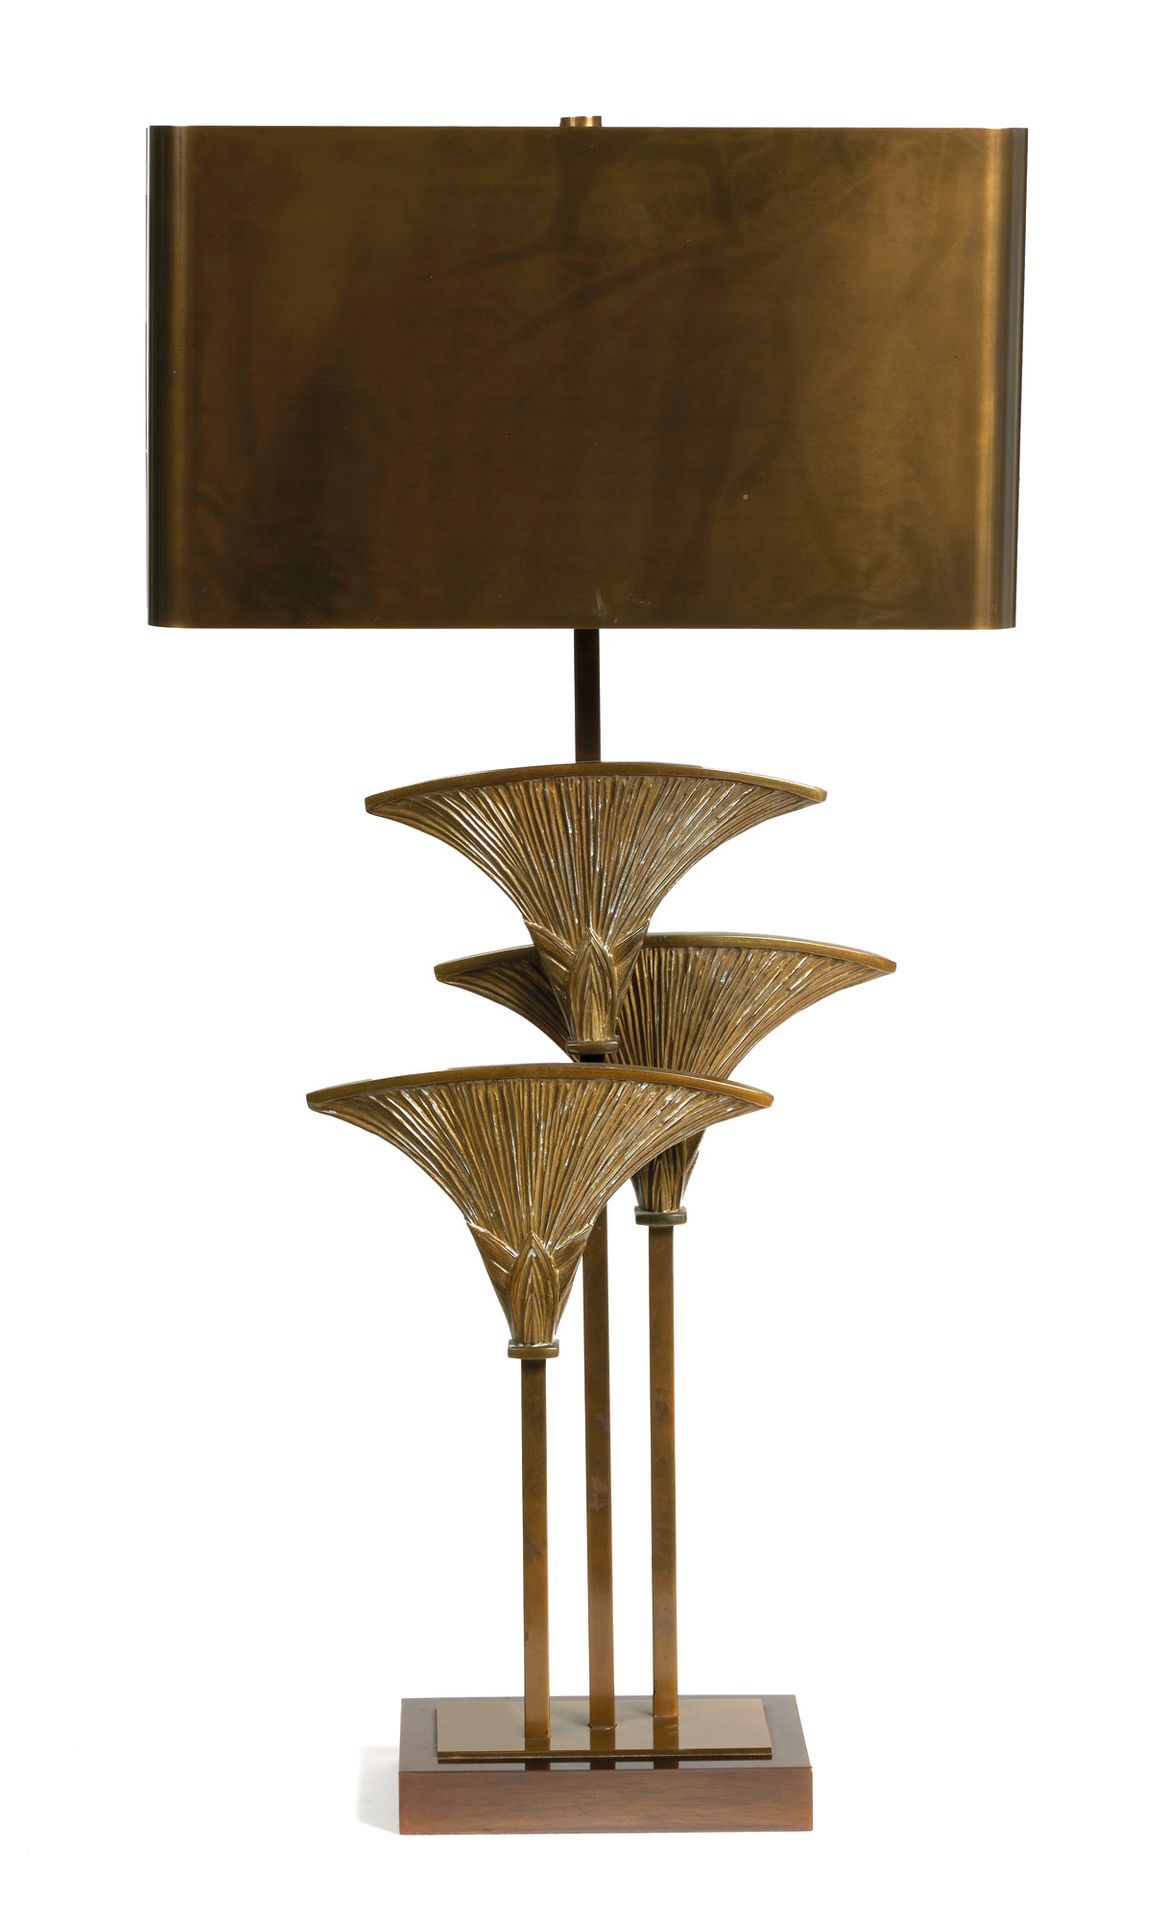 MAISON CHARLES MAISON CHARLES

Lampe Modell "Thèbes" mit Dekor aus drei Papyrusb&hellip;